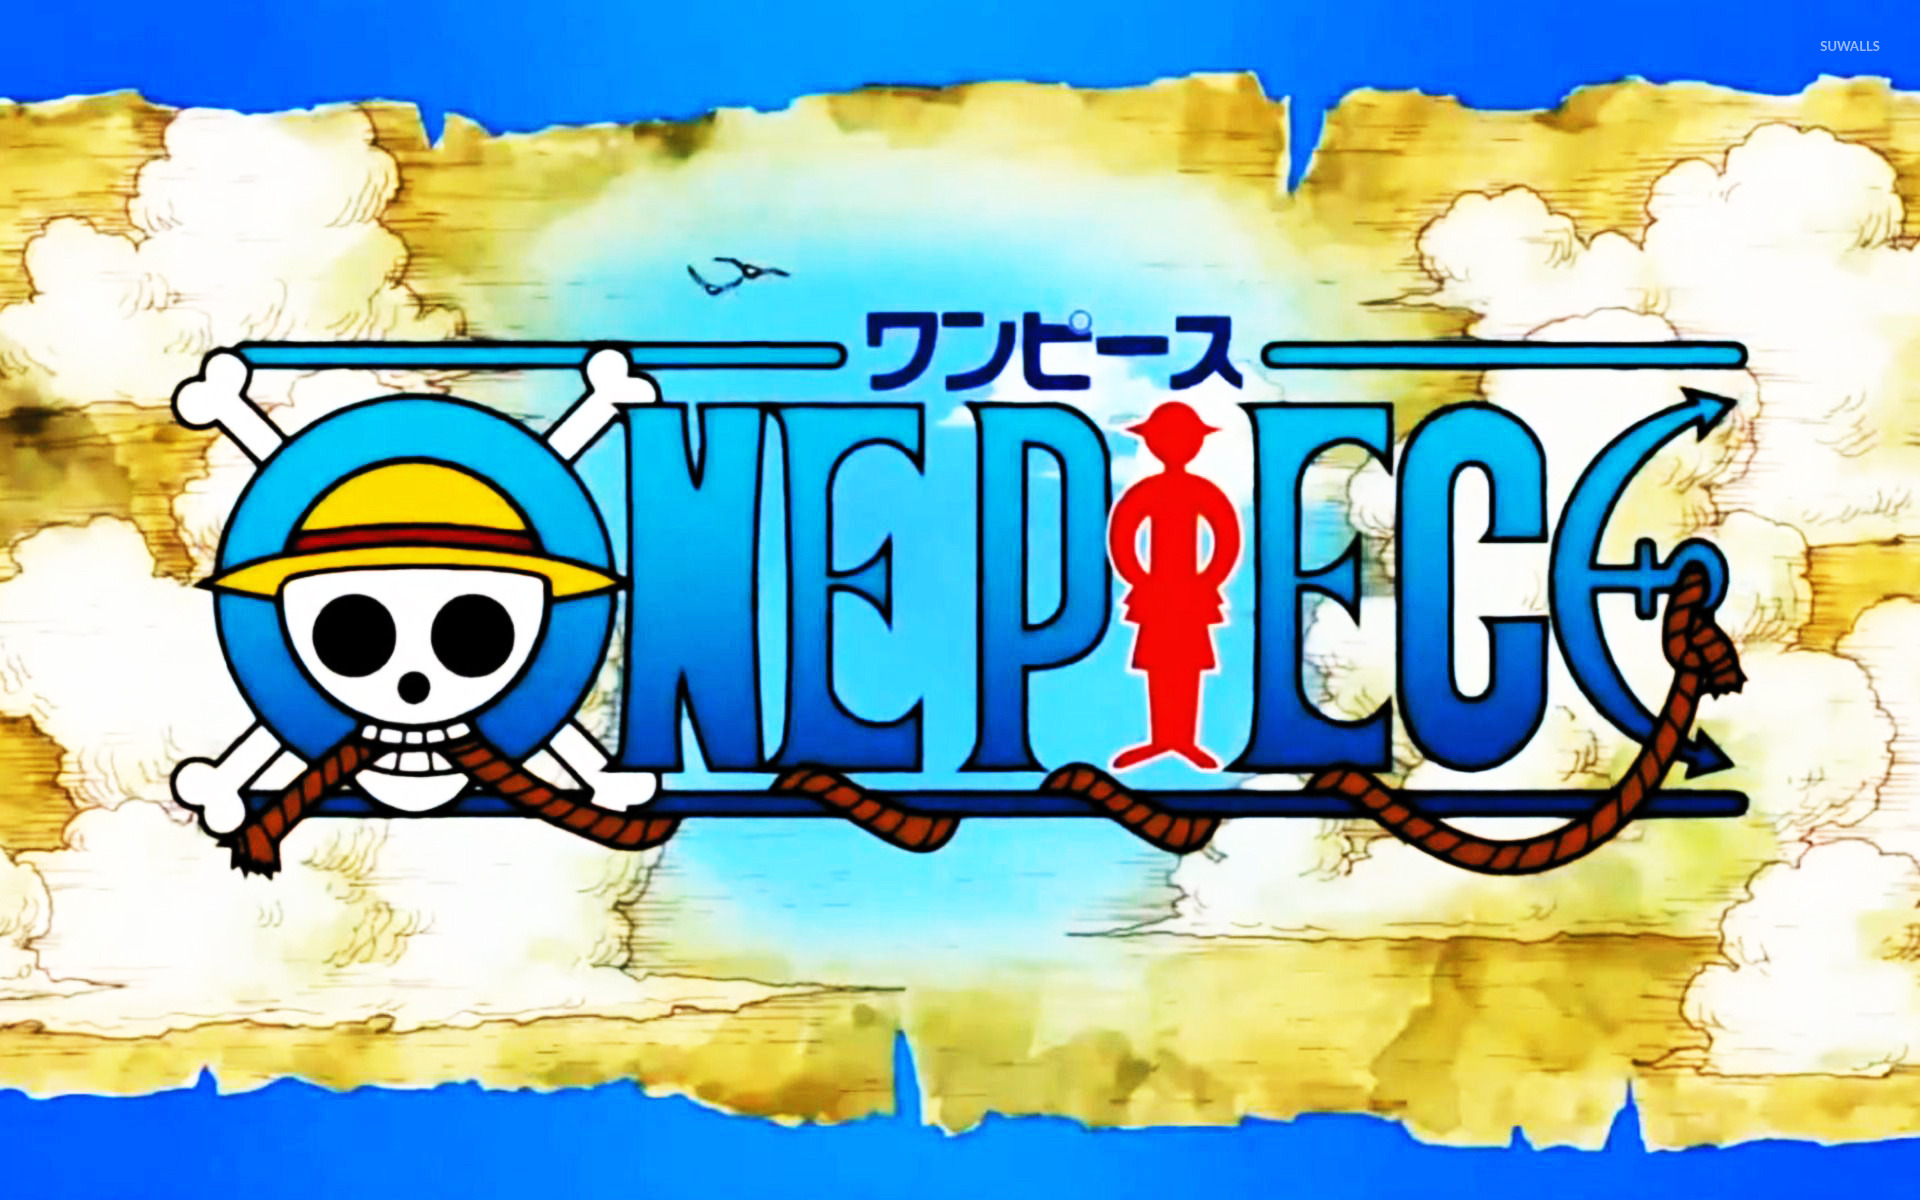 One Piece Wallpapers Hd  Logo wallpaper hd, One piece logo, Hd anime  wallpapers